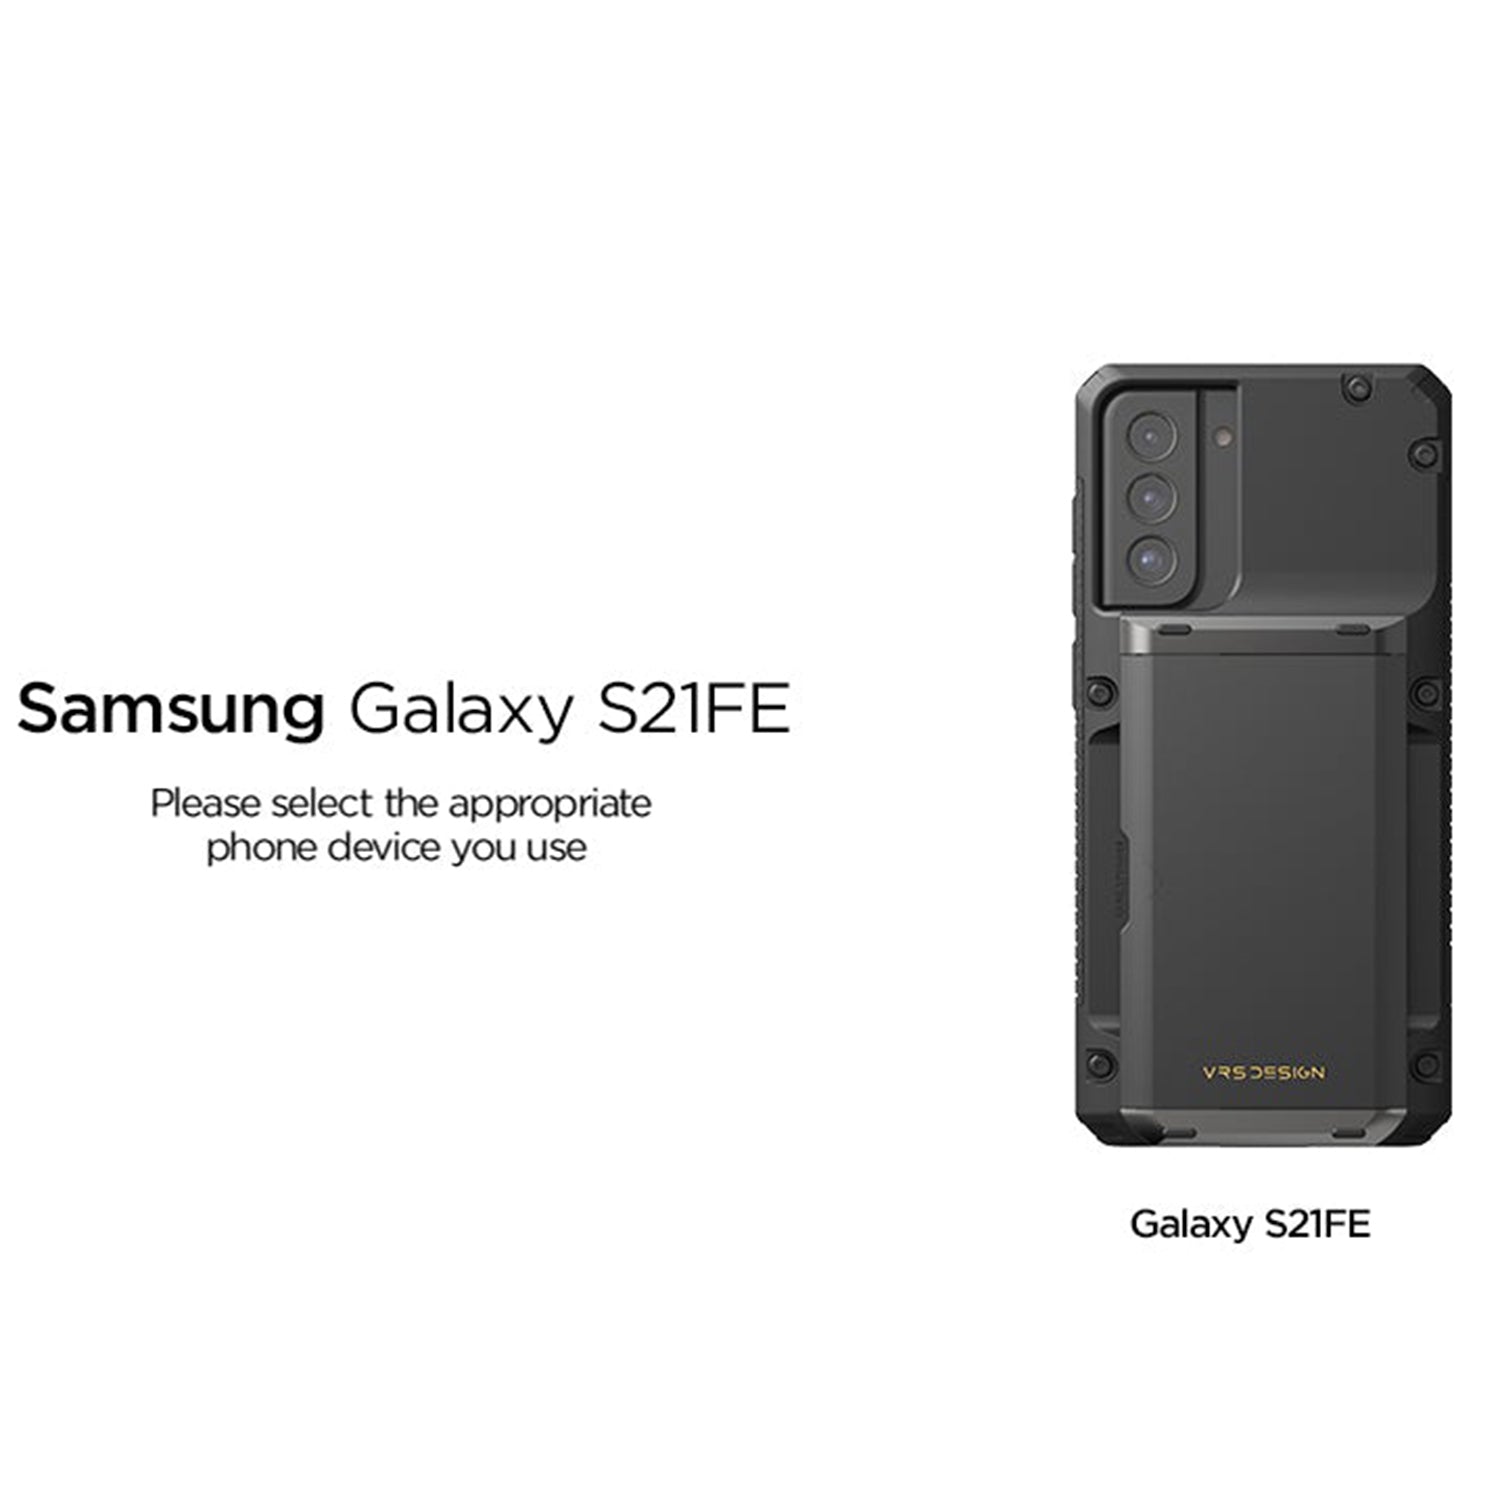 VRS Design Damda Glide Pro Case for Samsung Galaxy S21 FE Default ONE2WORLD 